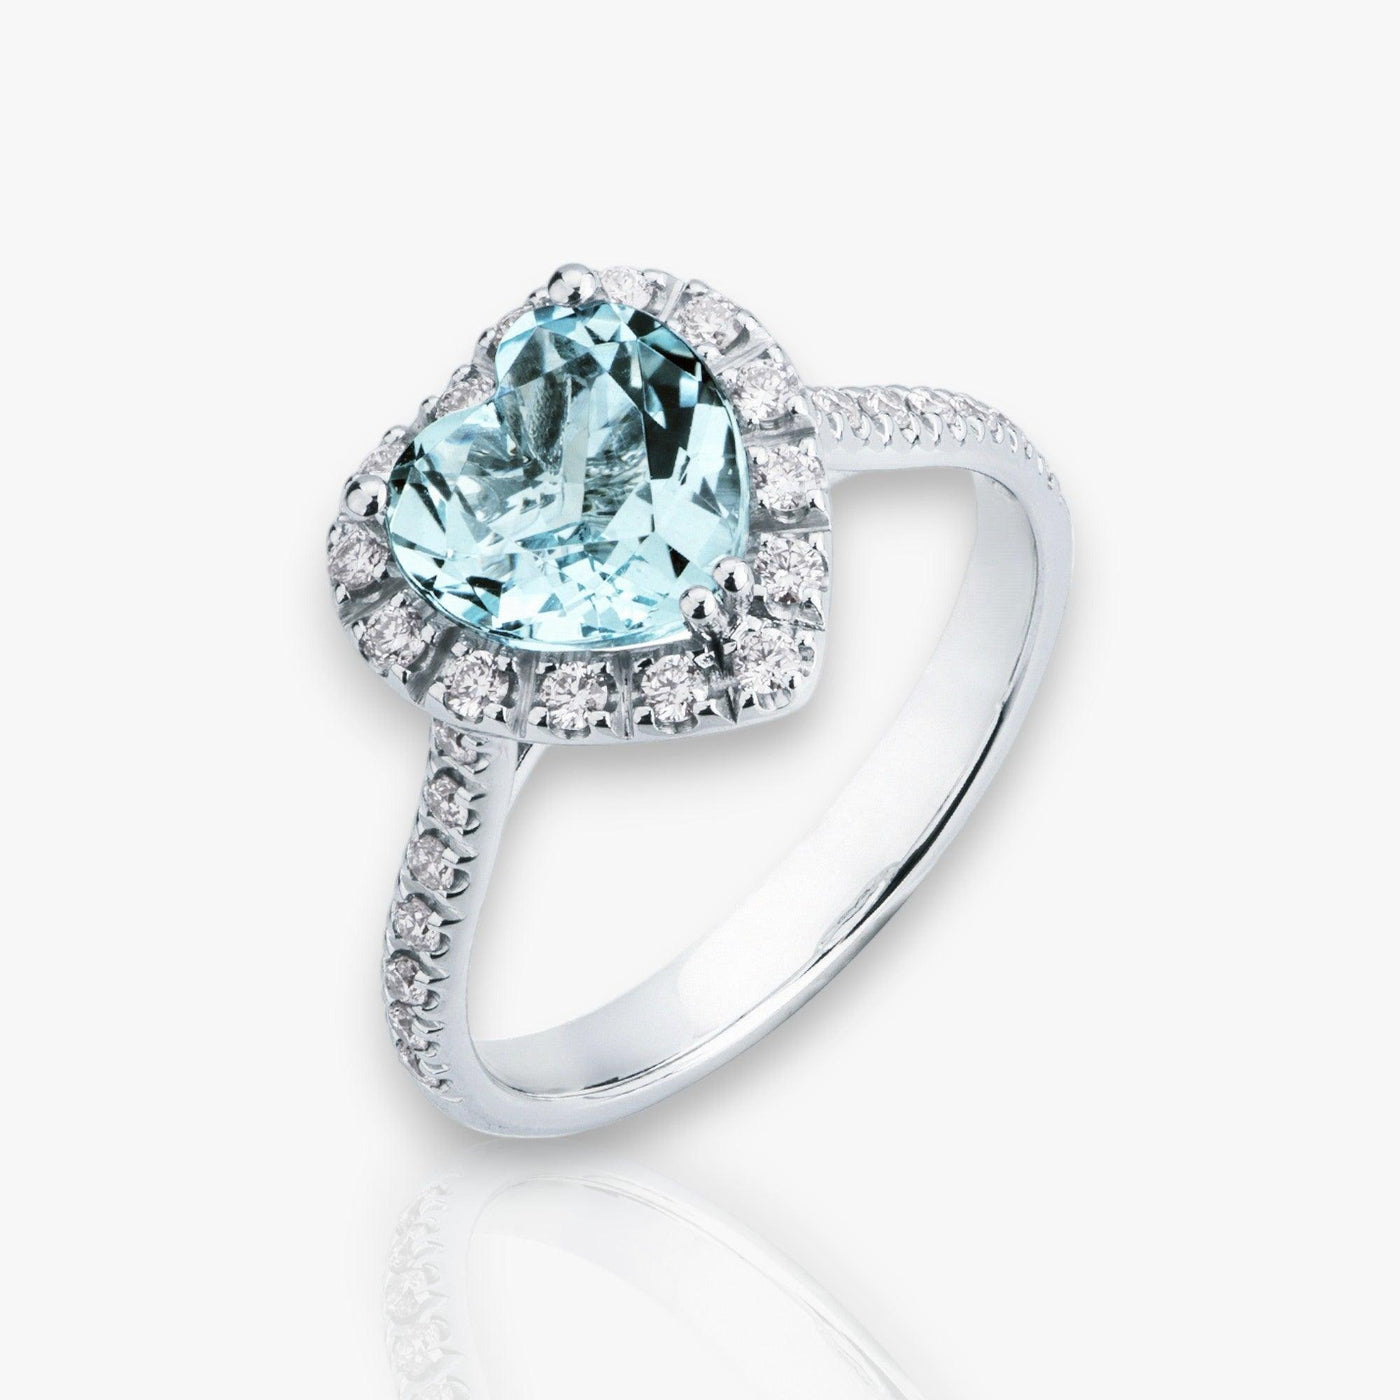 Aquamarine Heart Ring embedded in diamonds - Moregola Fine Jewelry